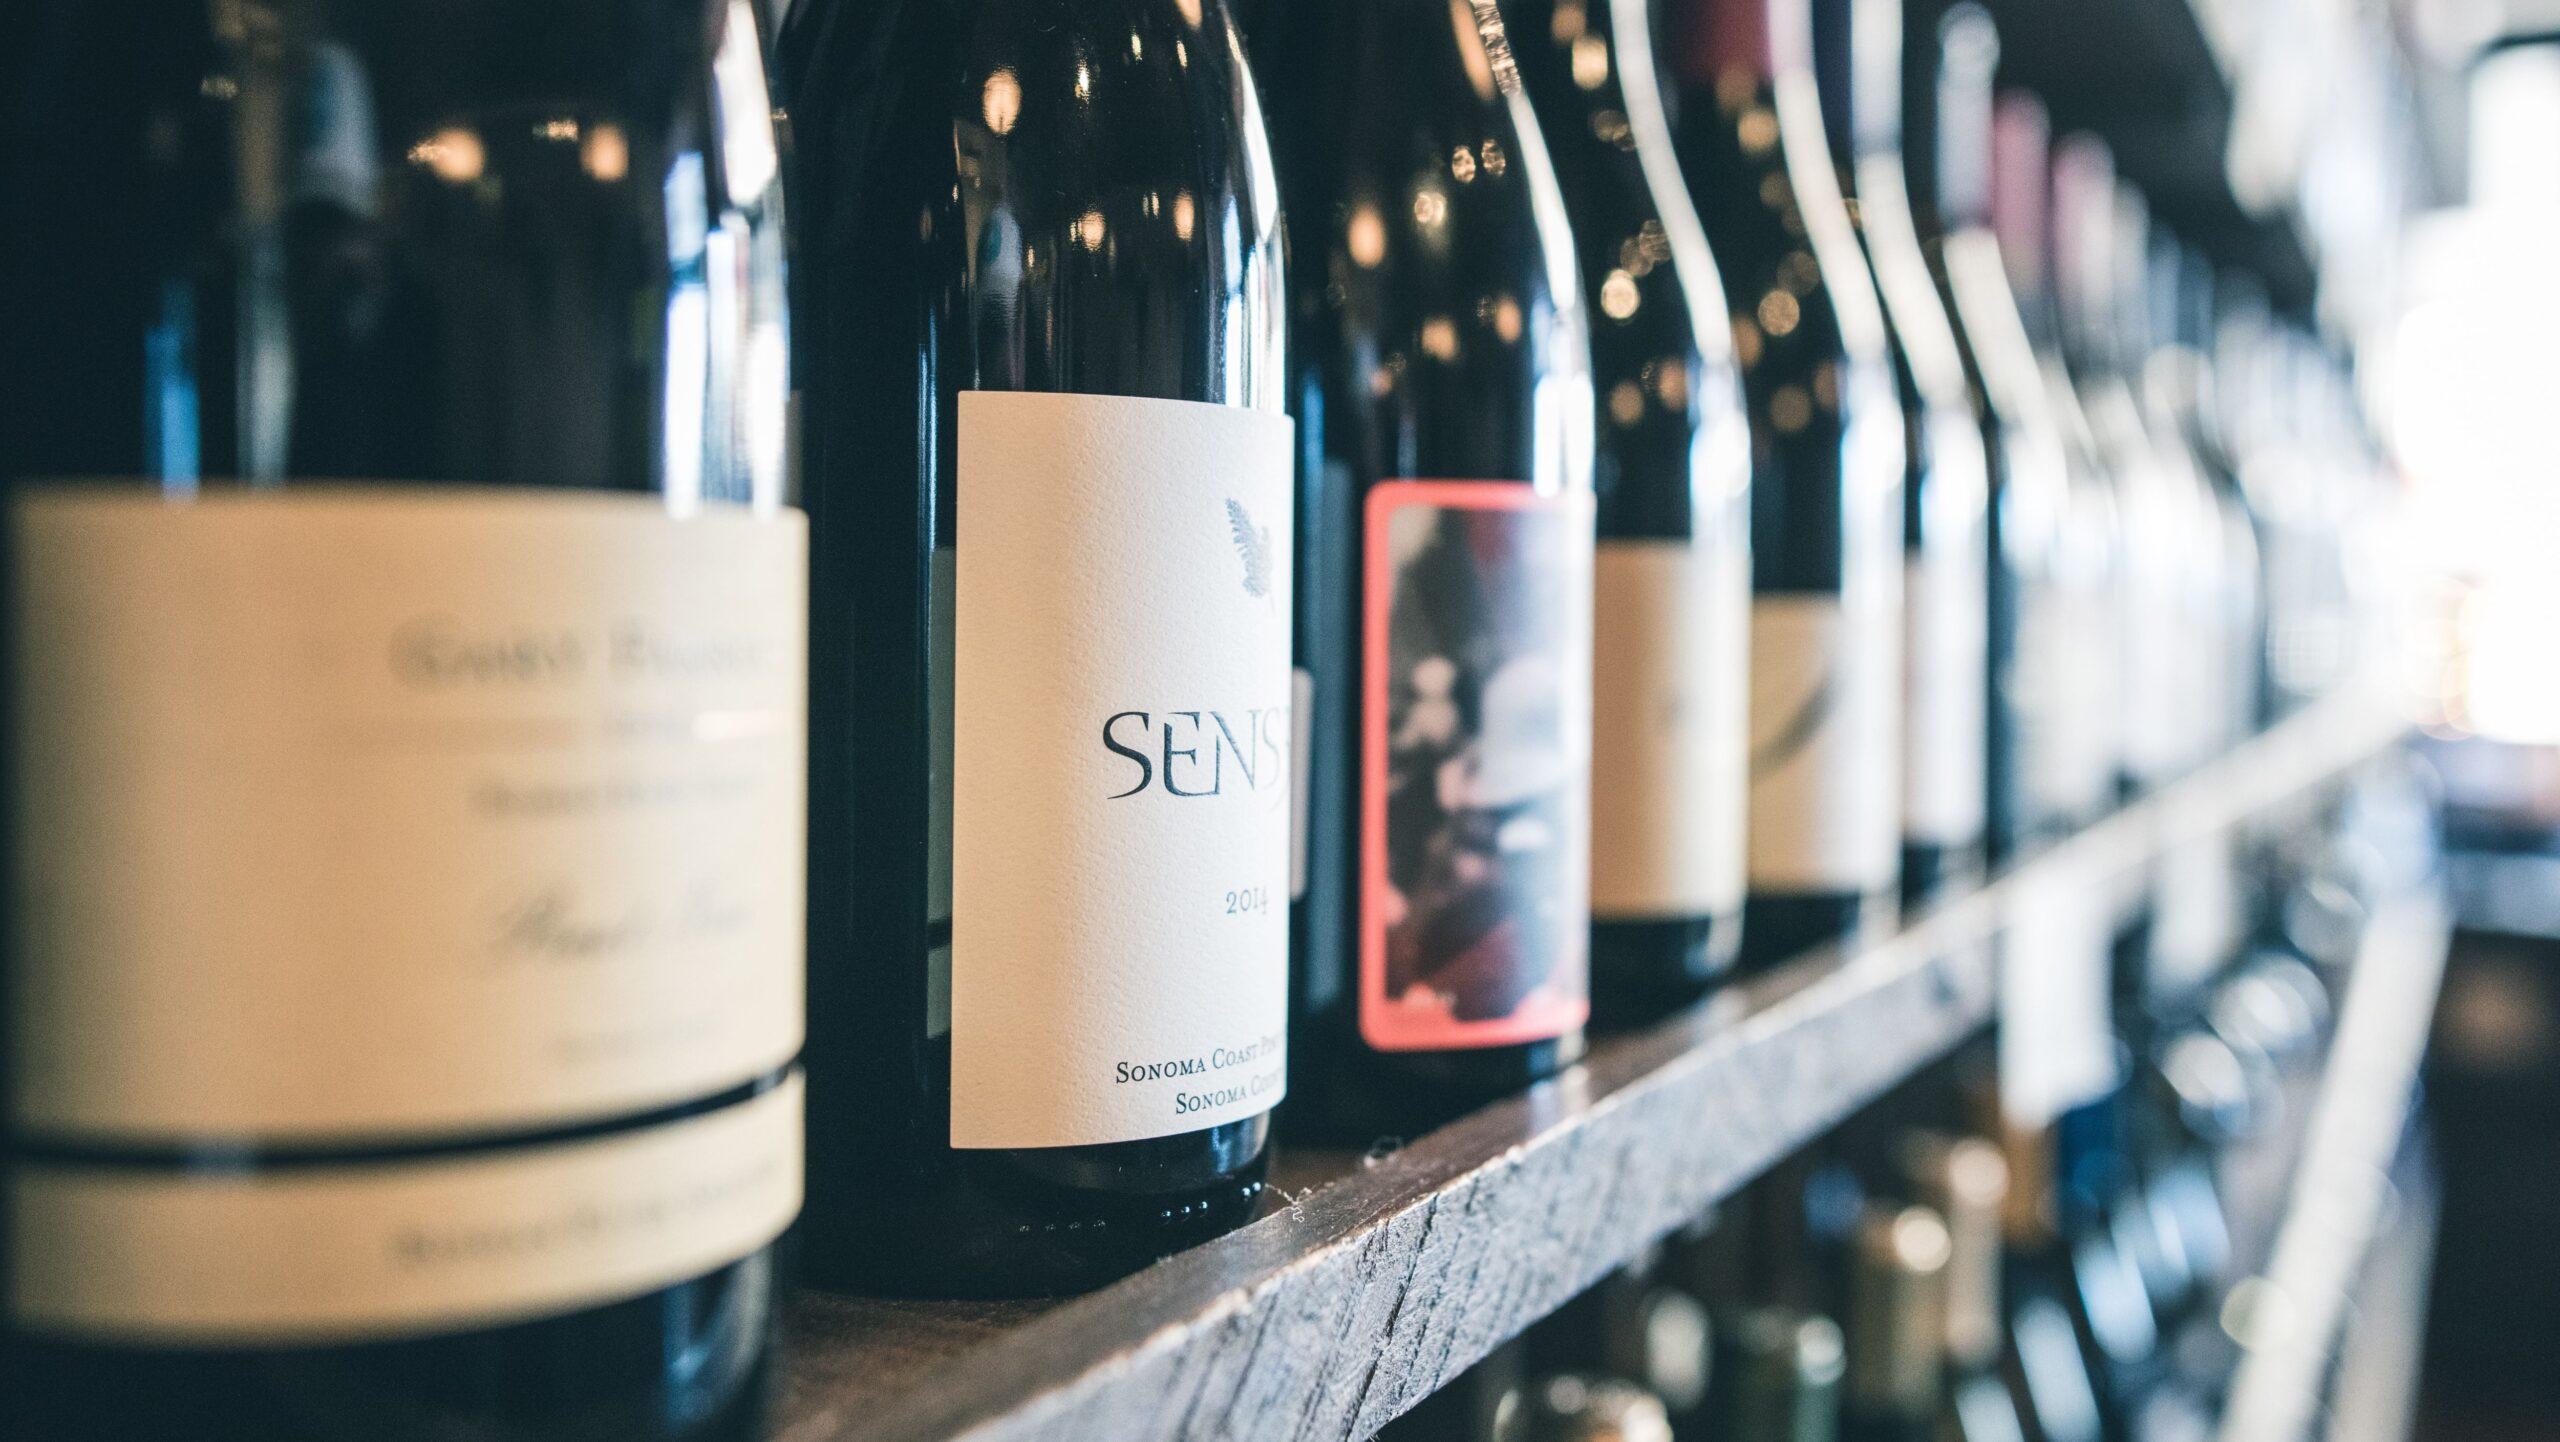 Wine bottles lined up on a shelf.